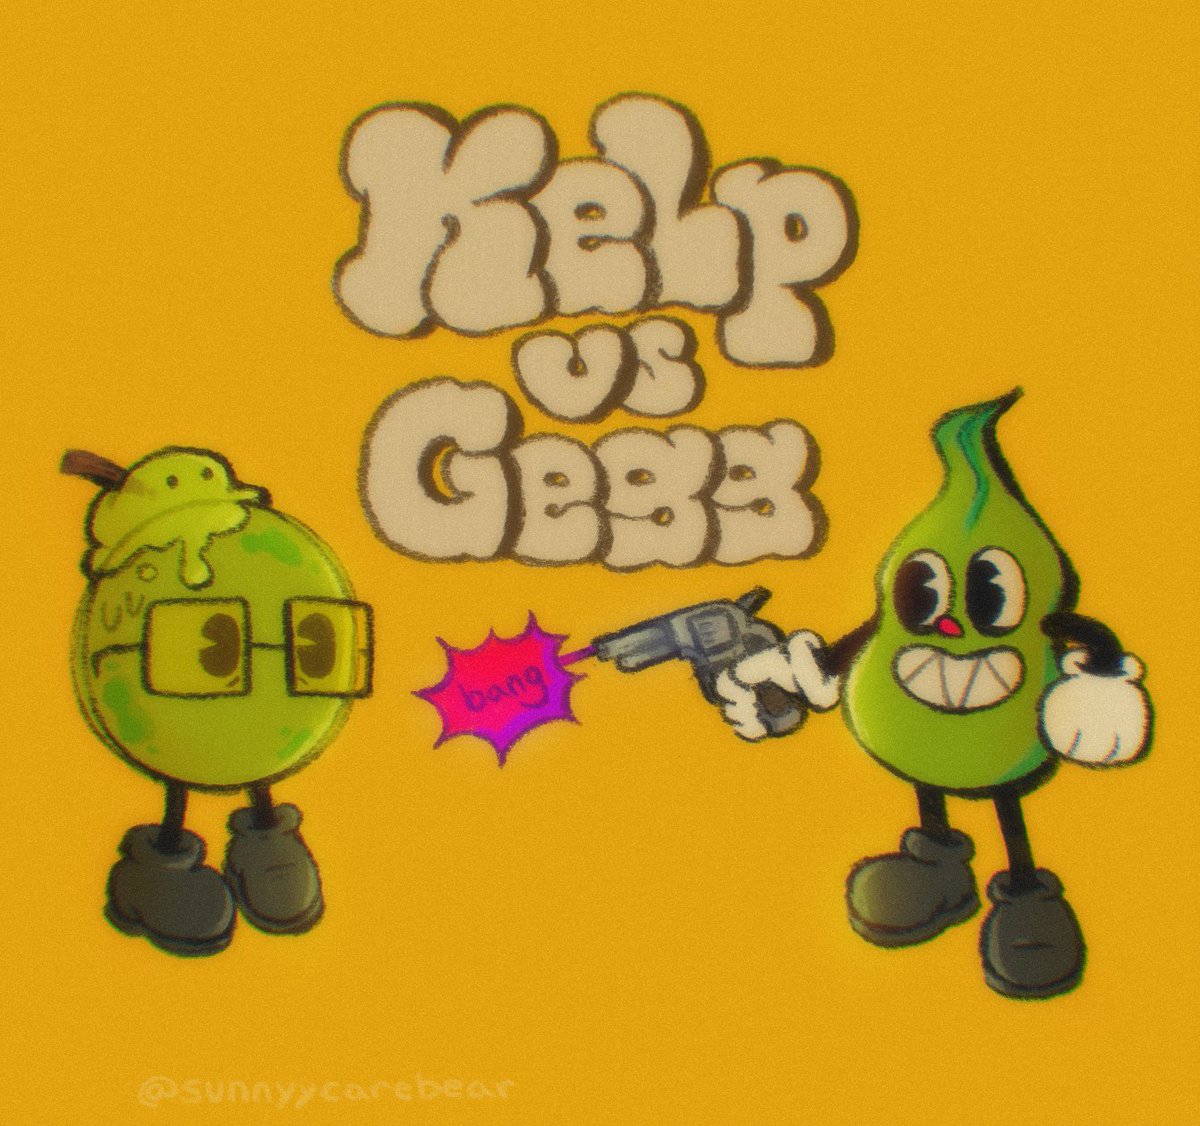 Kelp vs gegg 
#slimeciclefanart #geggfanart #foolishfanart #qsmpfanart